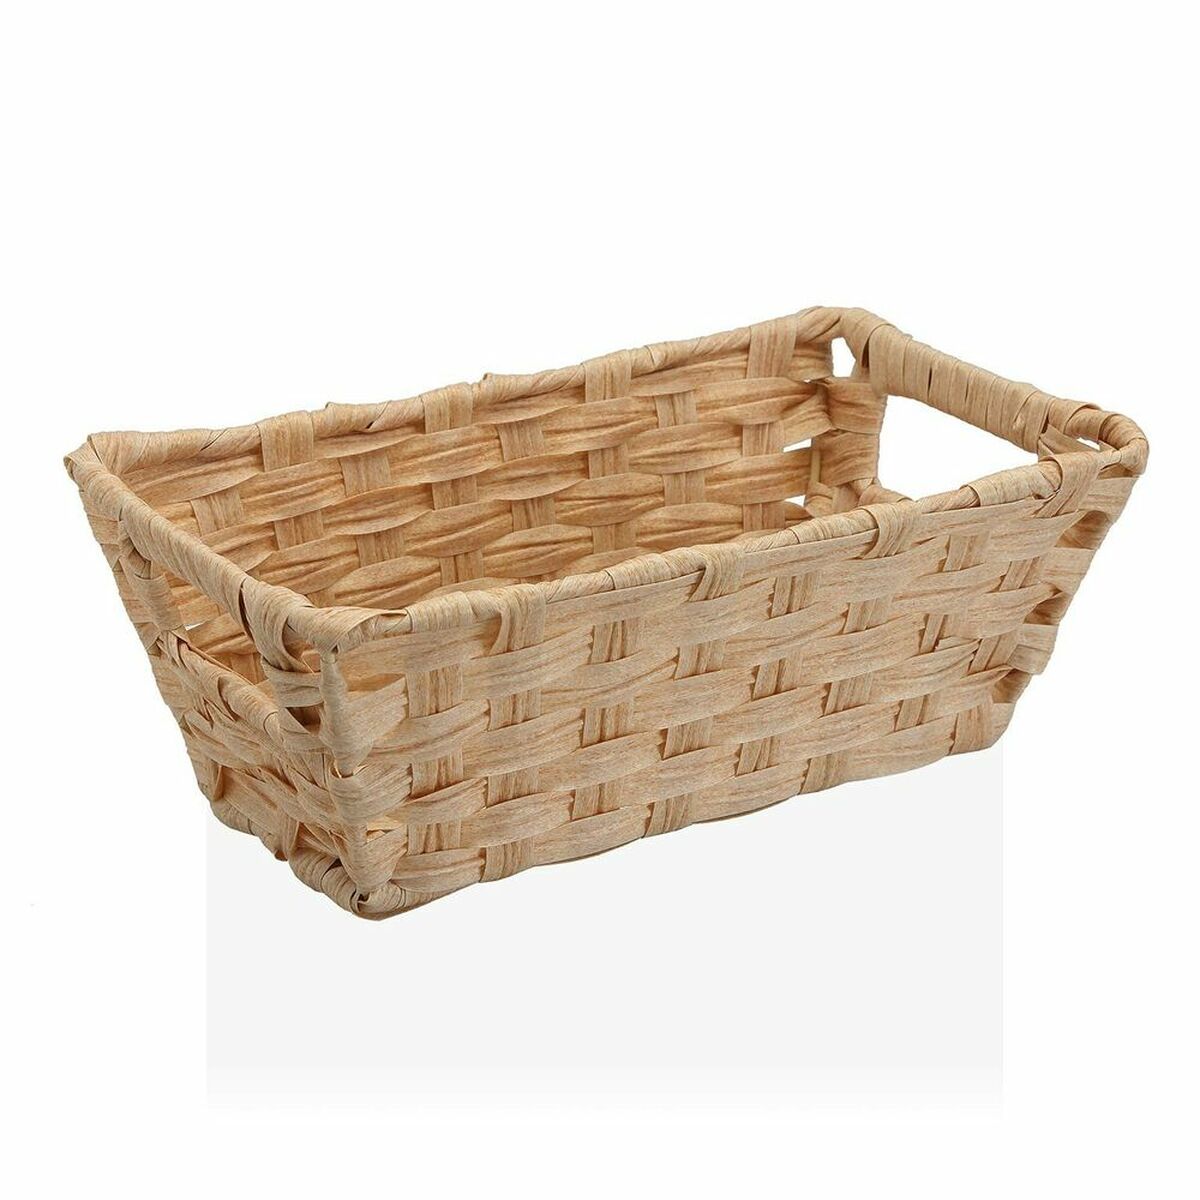 Basket Versa Beige With handles Polyethylene (17 x 11,5 x 29 cm)